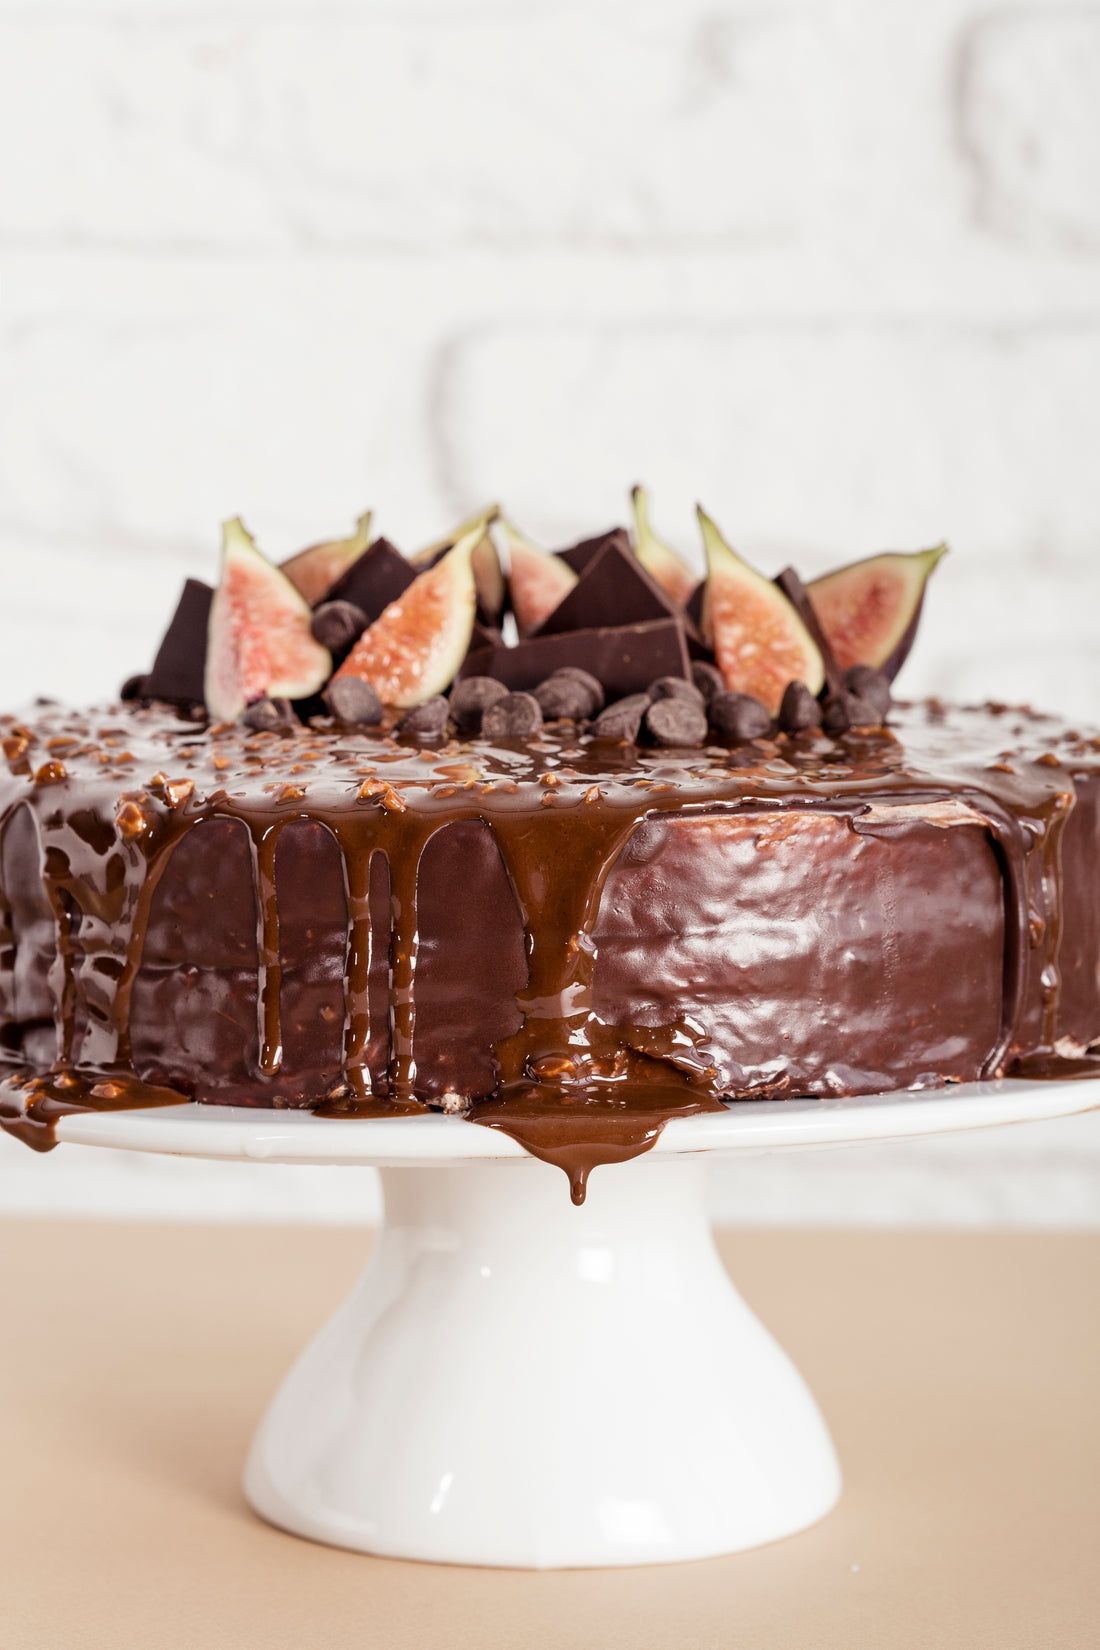 Matilda’s Healthier Chocolate Cake